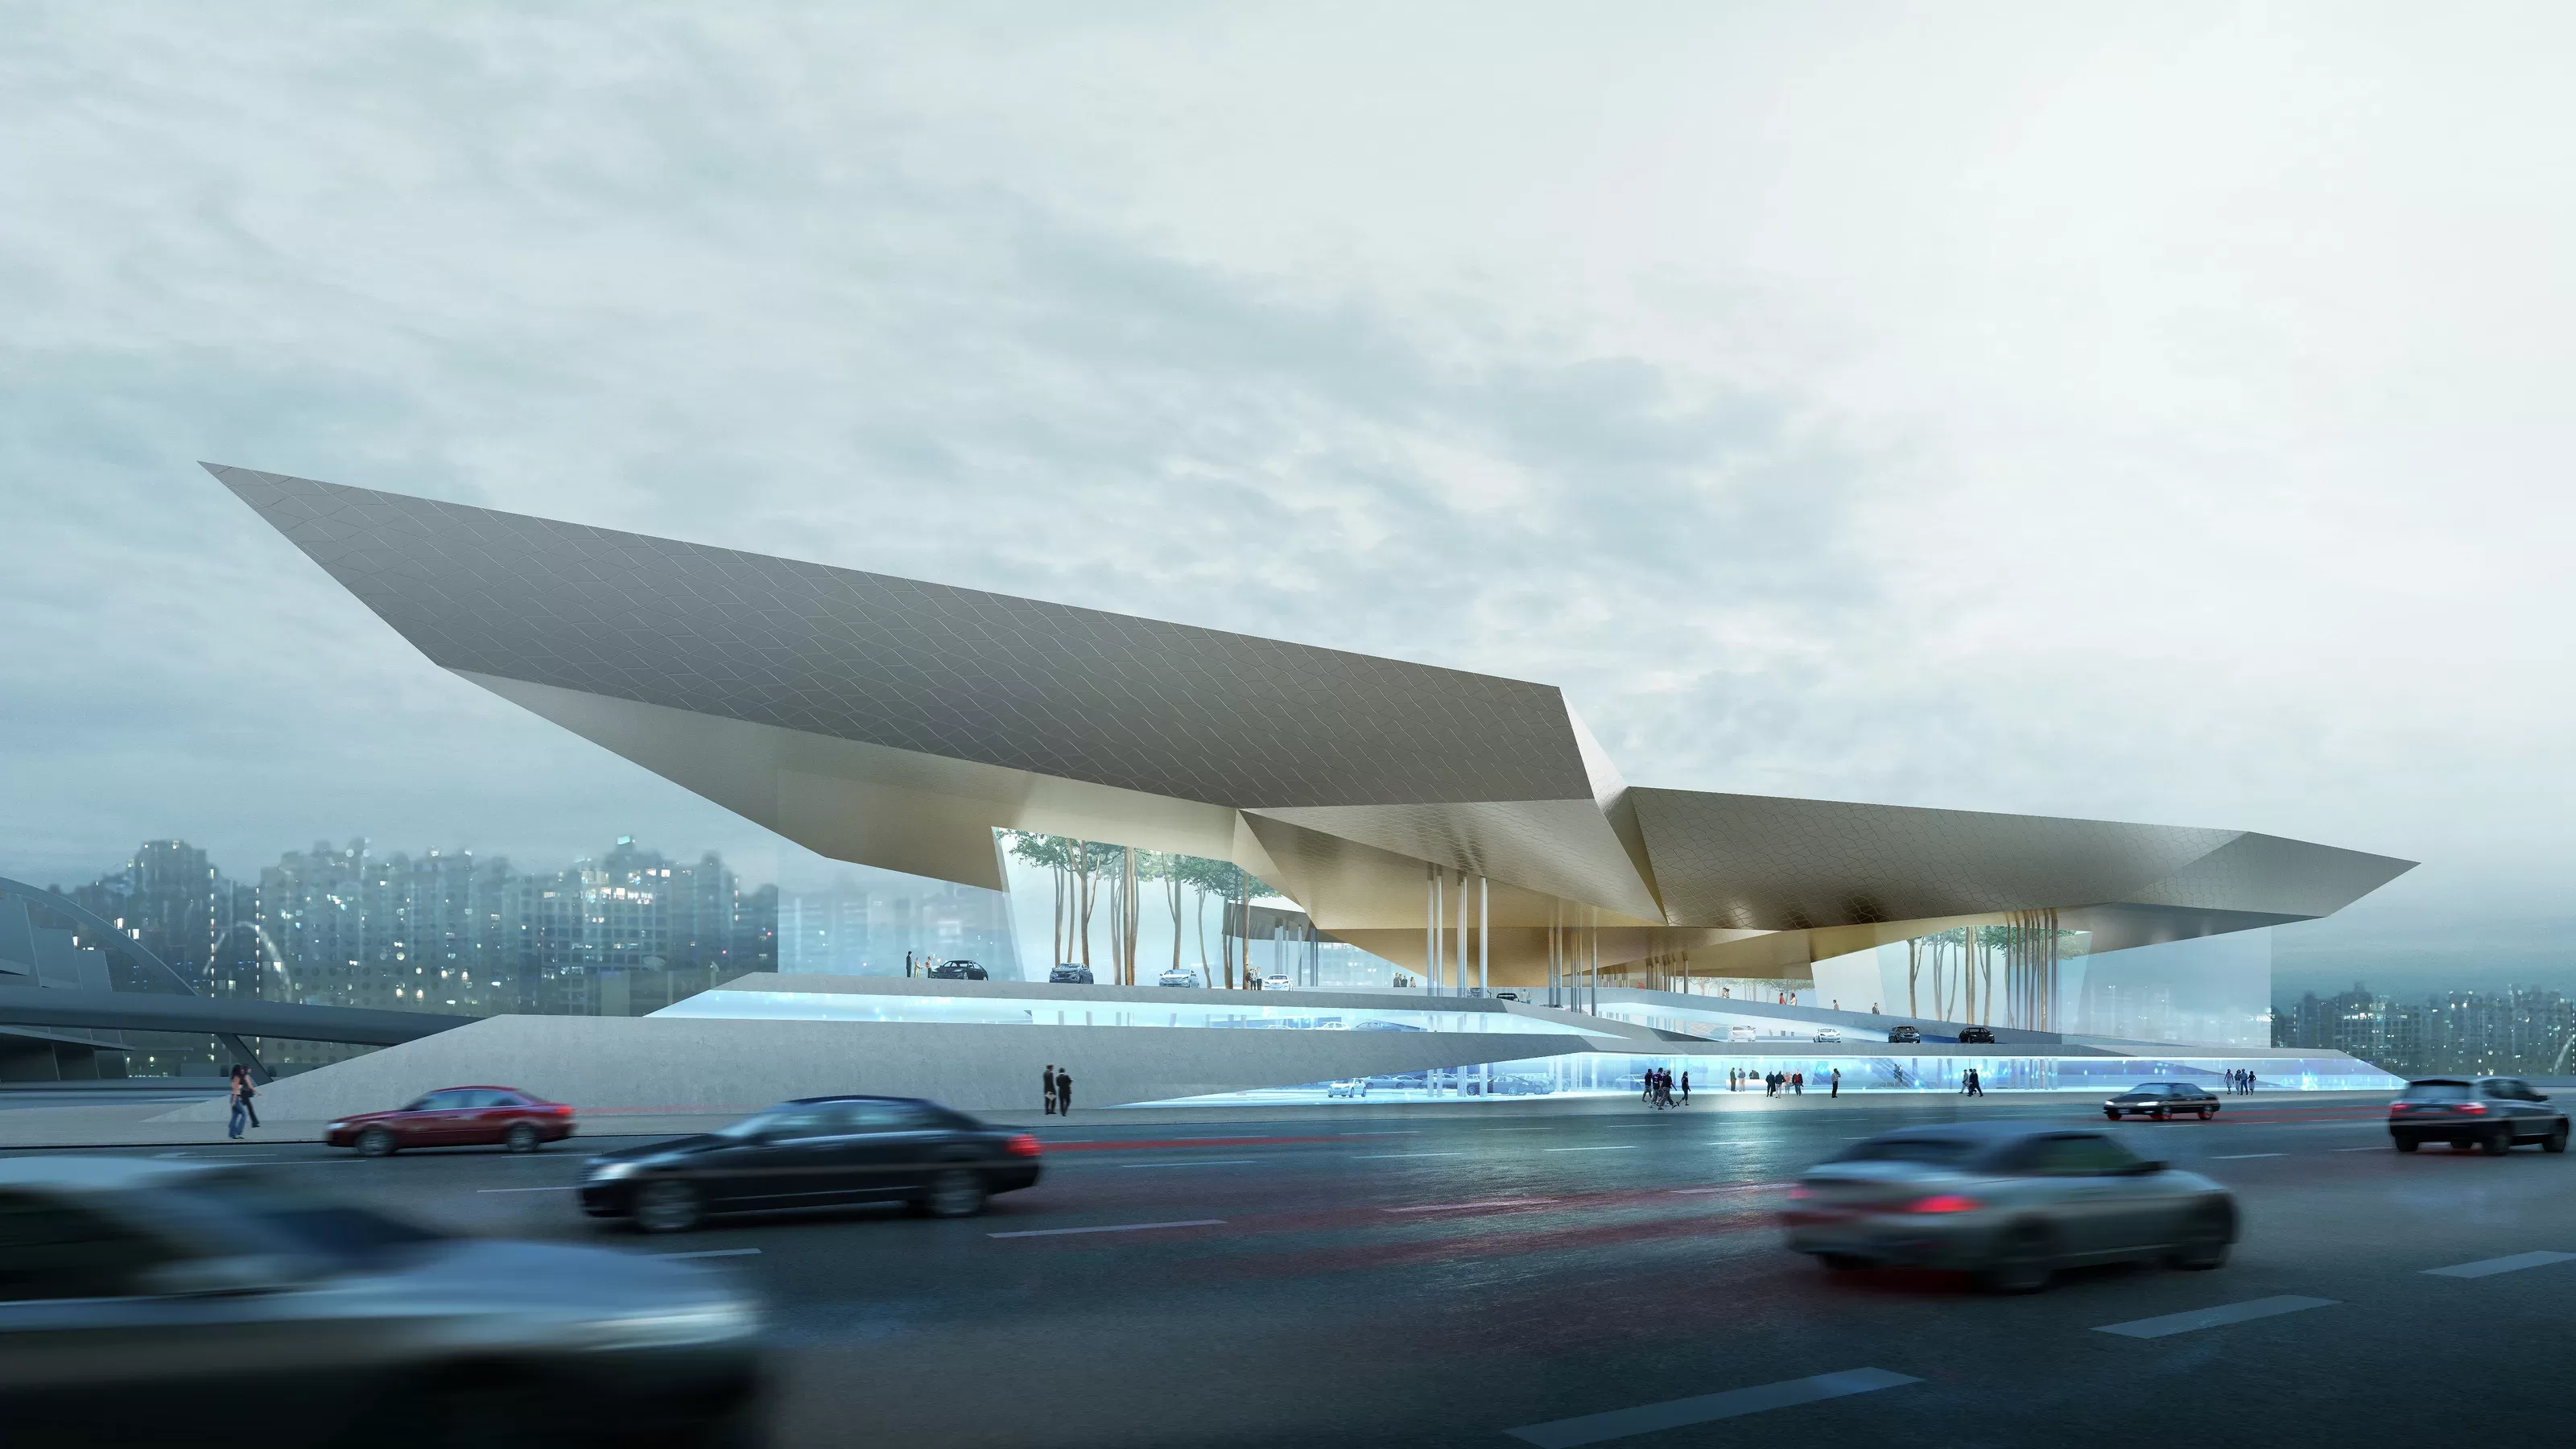 Hyundai Motorstudio Goyang  |  DMAA Delugan Meissl Associated Architects